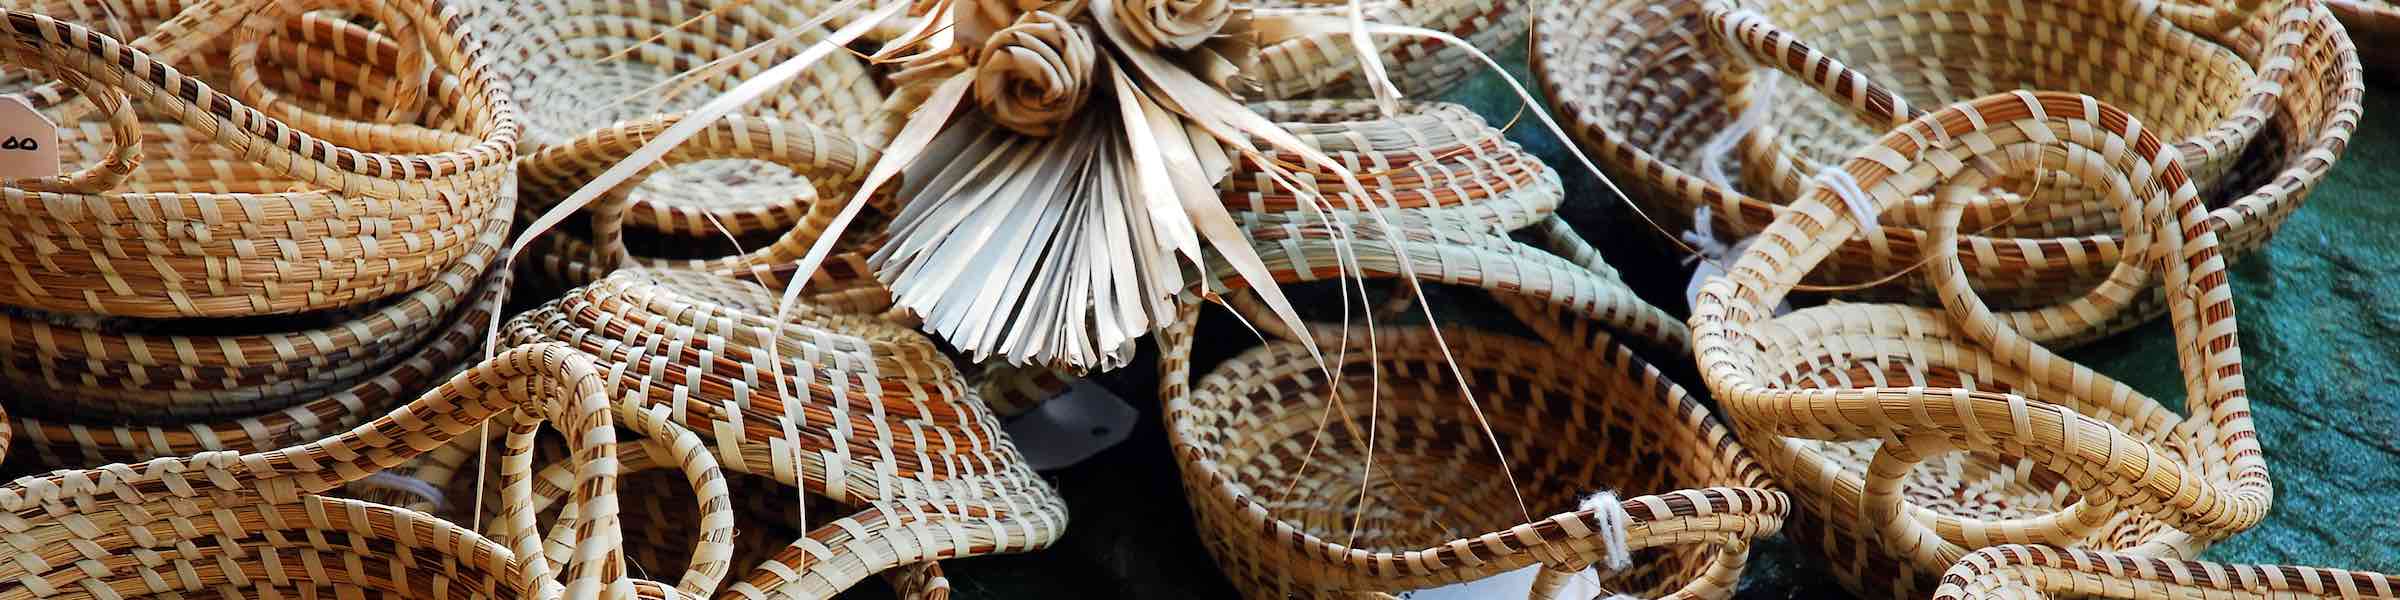 Display of traditionally-made sweetgrass baskets, Charleston, SC.